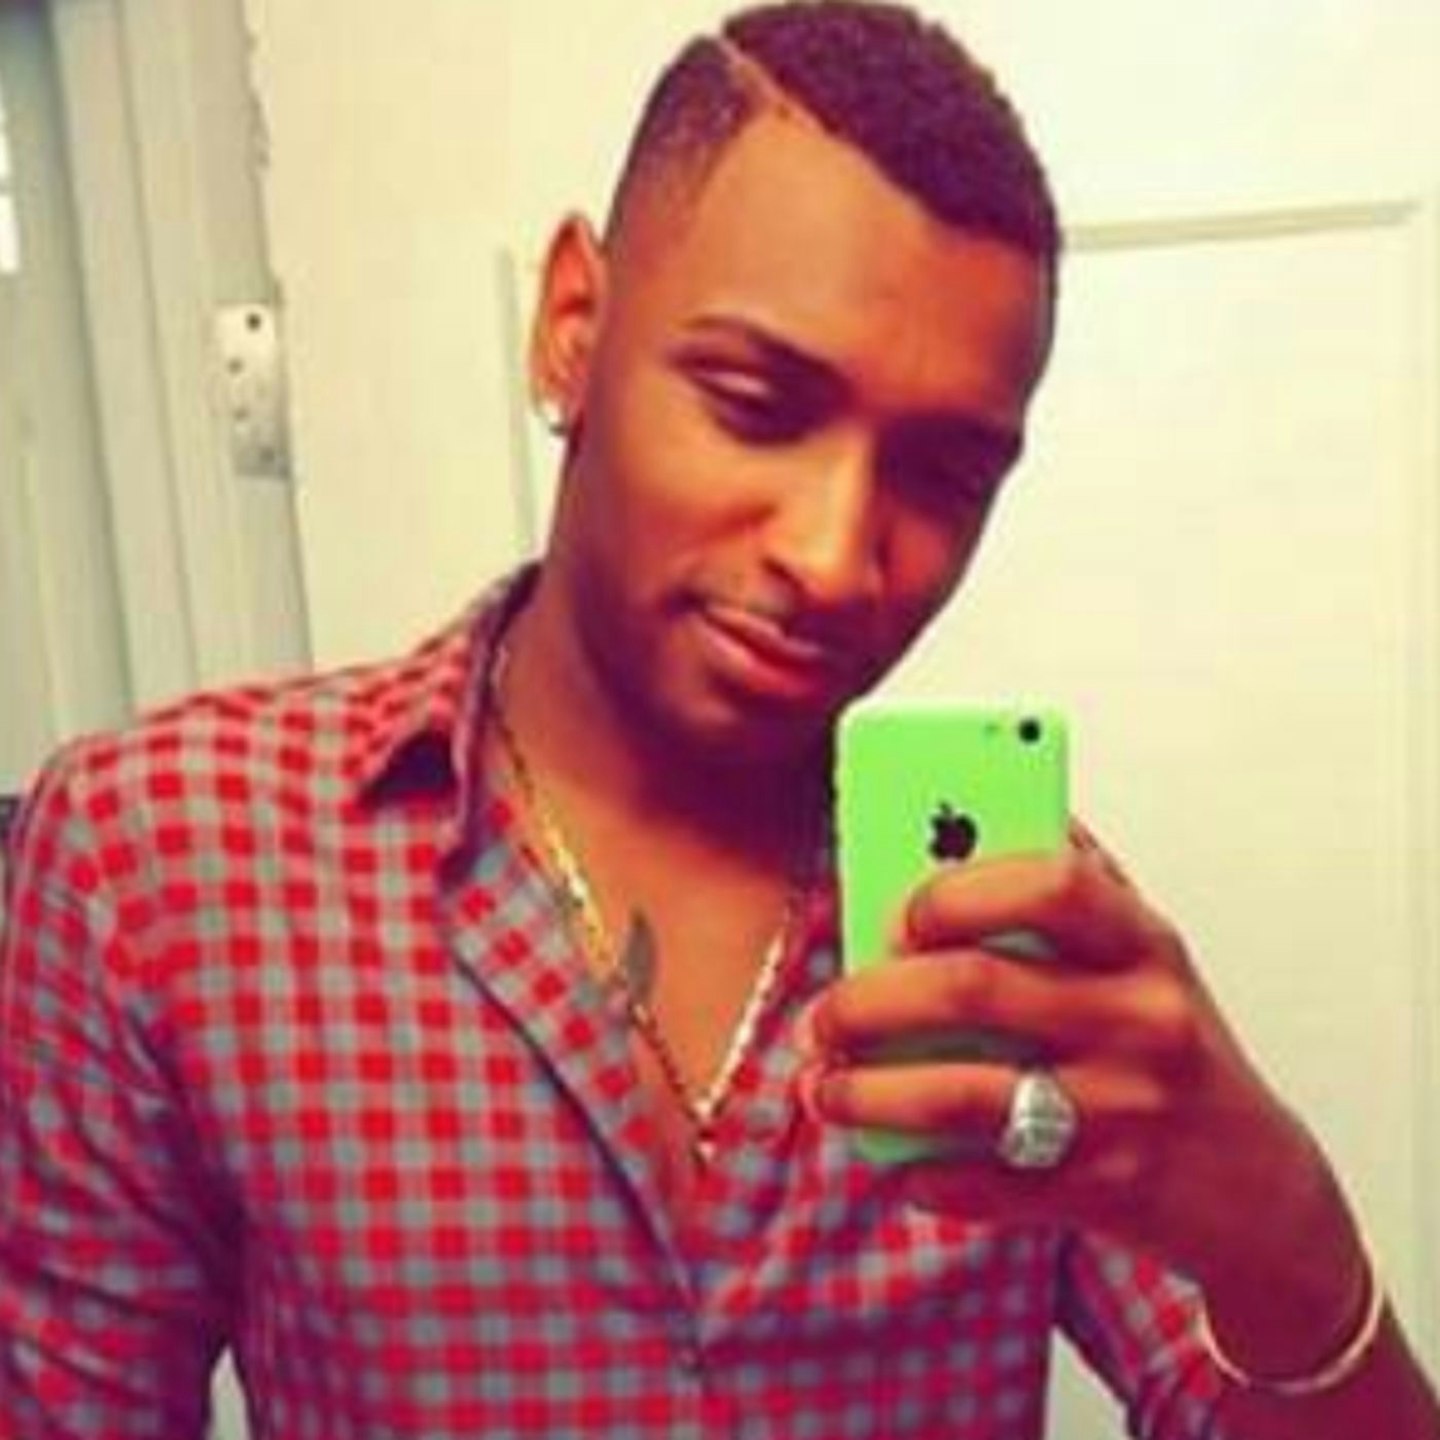 Victim of Orlando Shooting